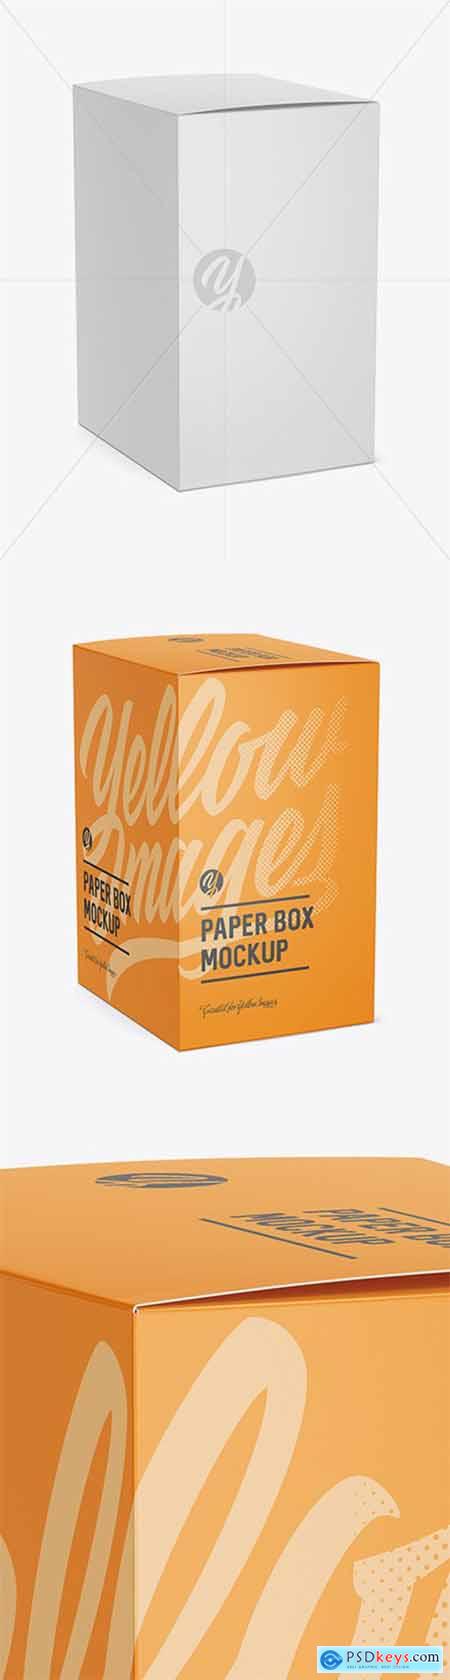 Paper Box Mockup - Halfside View 80251